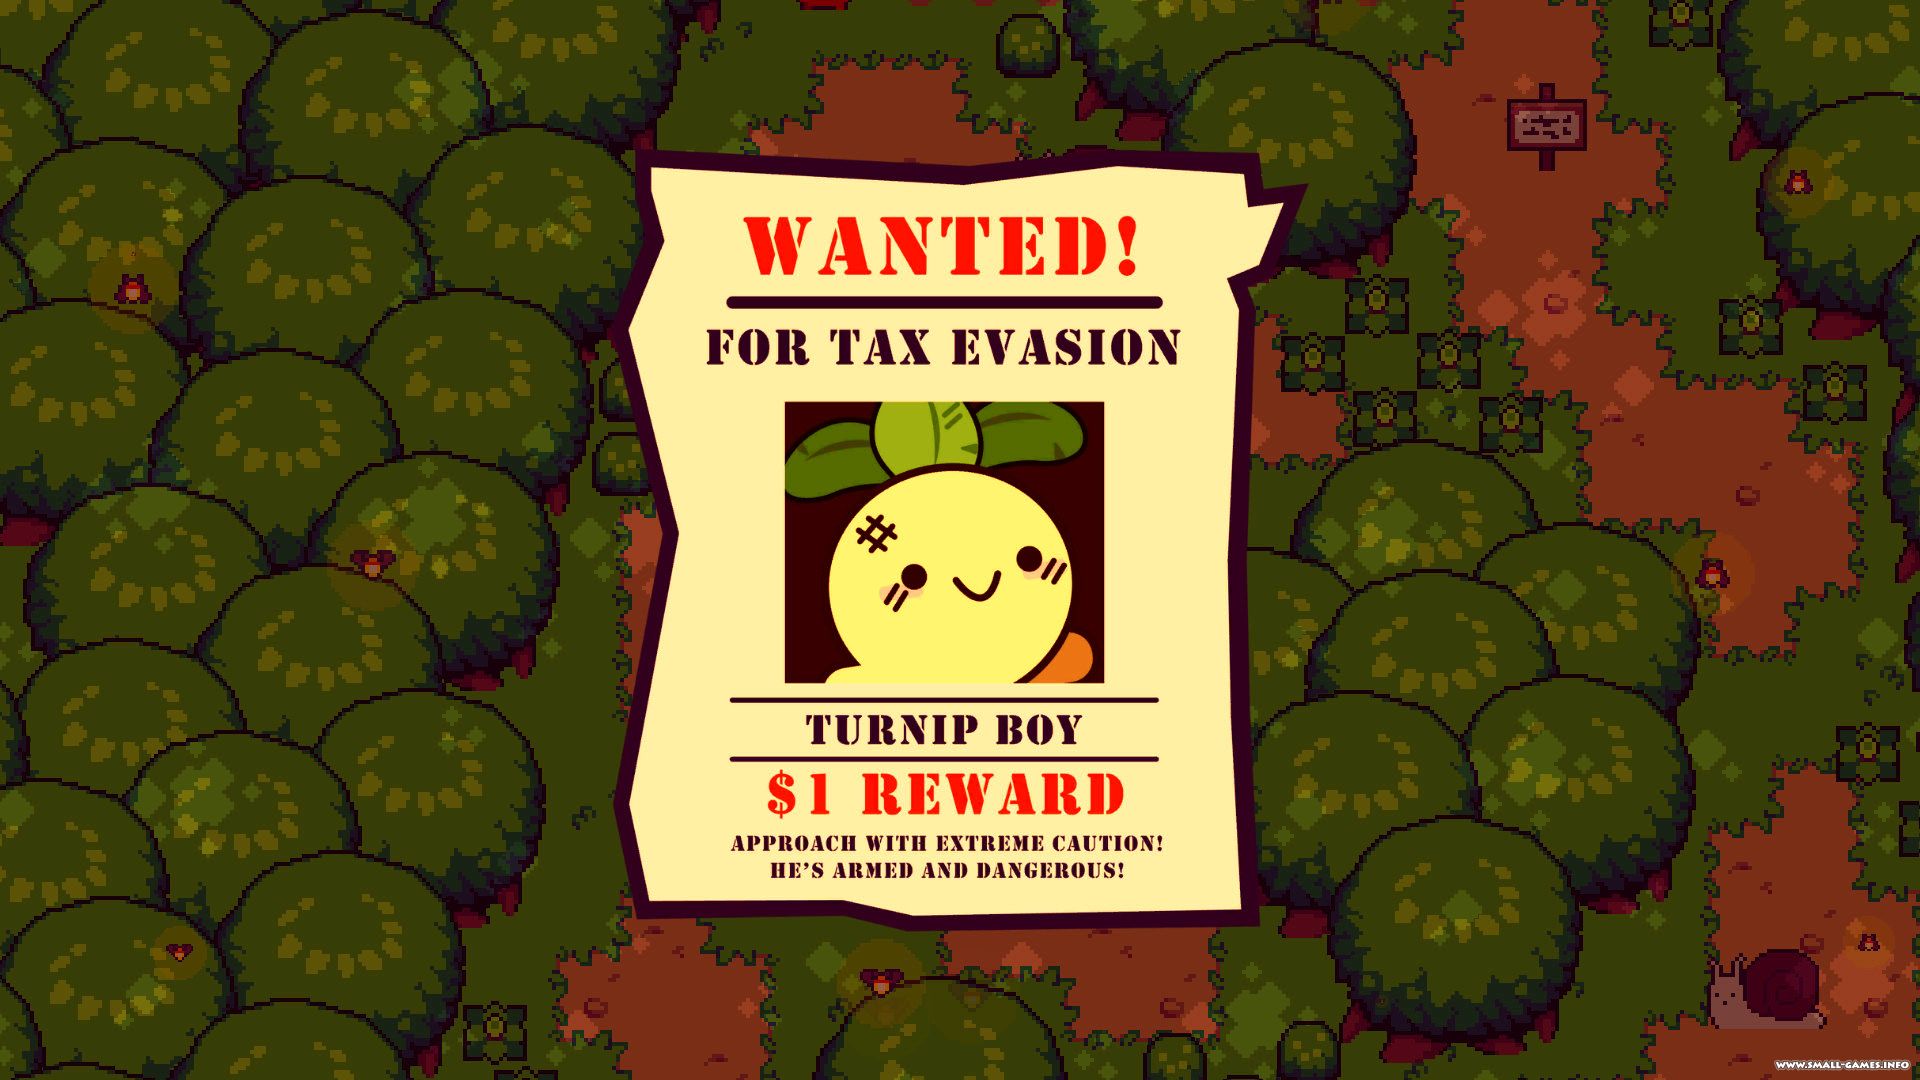 turnip boy commits tax evasion time to beat